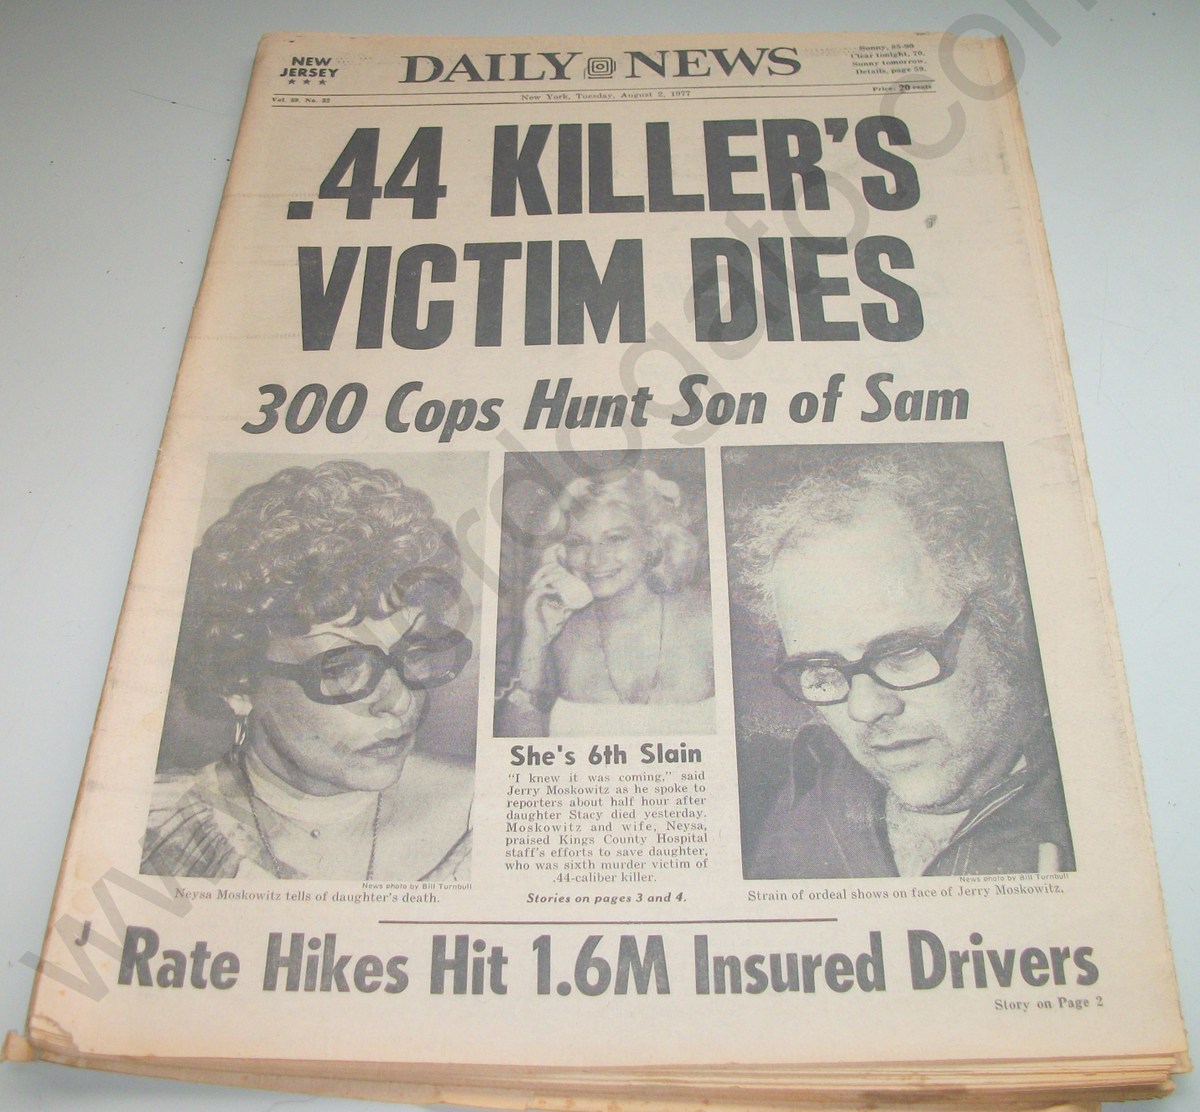 Daily News - Tuesday, August 2, 1977 - Son of Sam Serial Killer